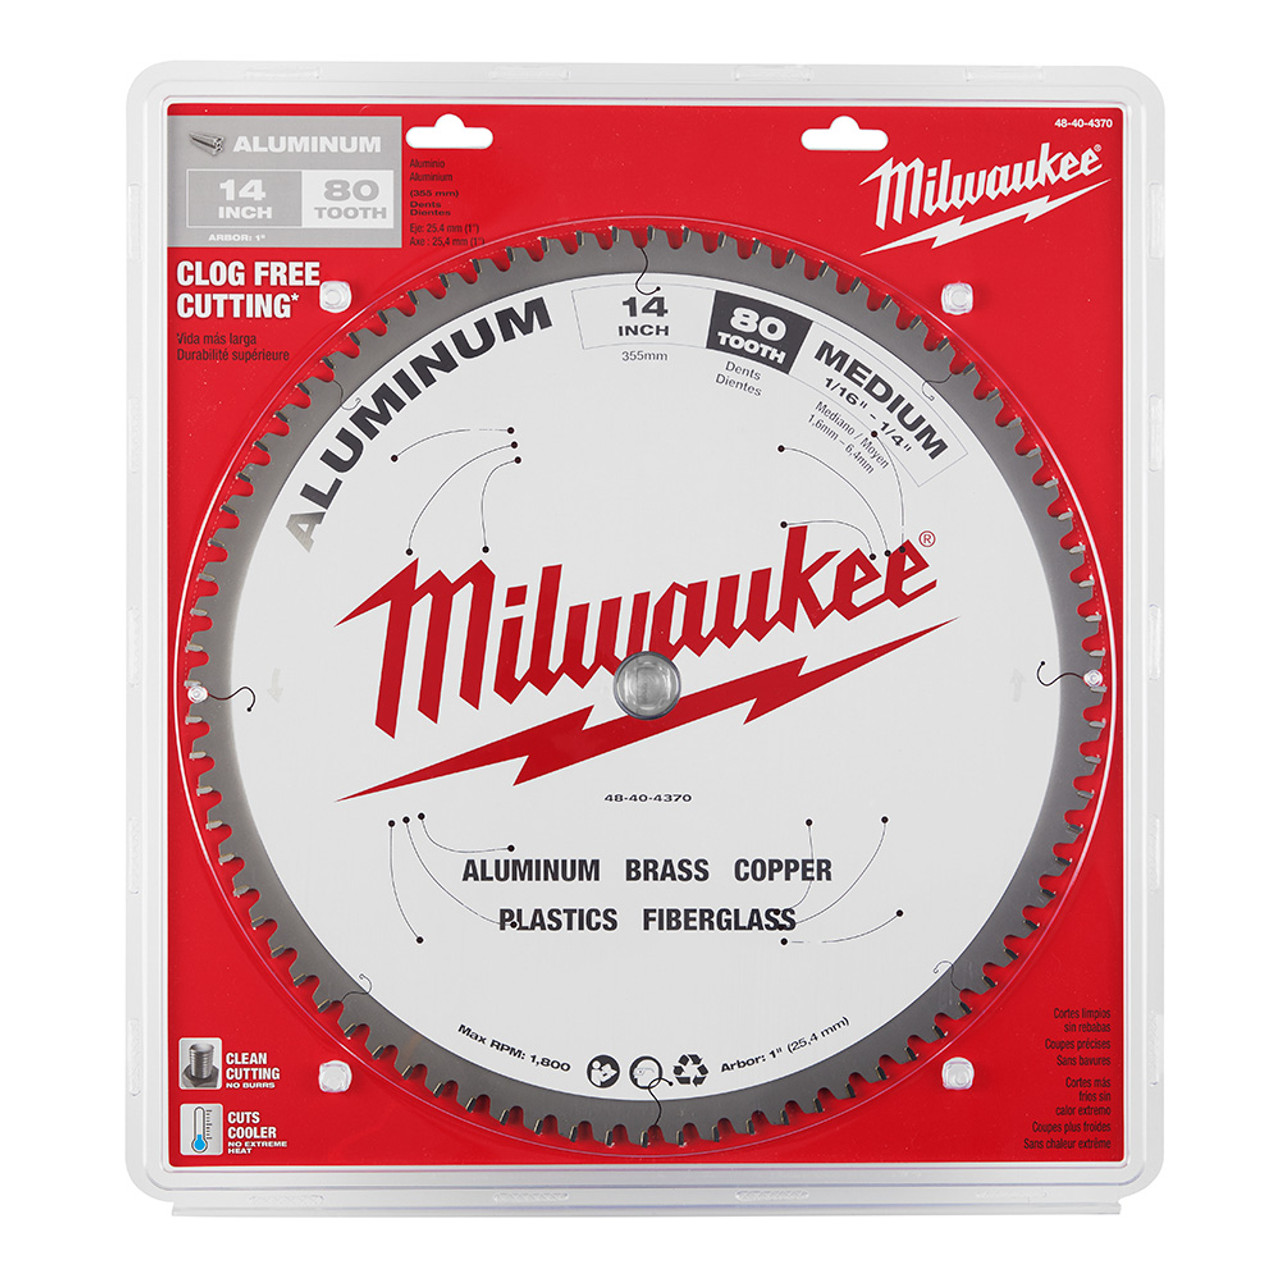 Milwaukee 48-40-4370 14 in. Aluminum Cutting Circular Saw Blade